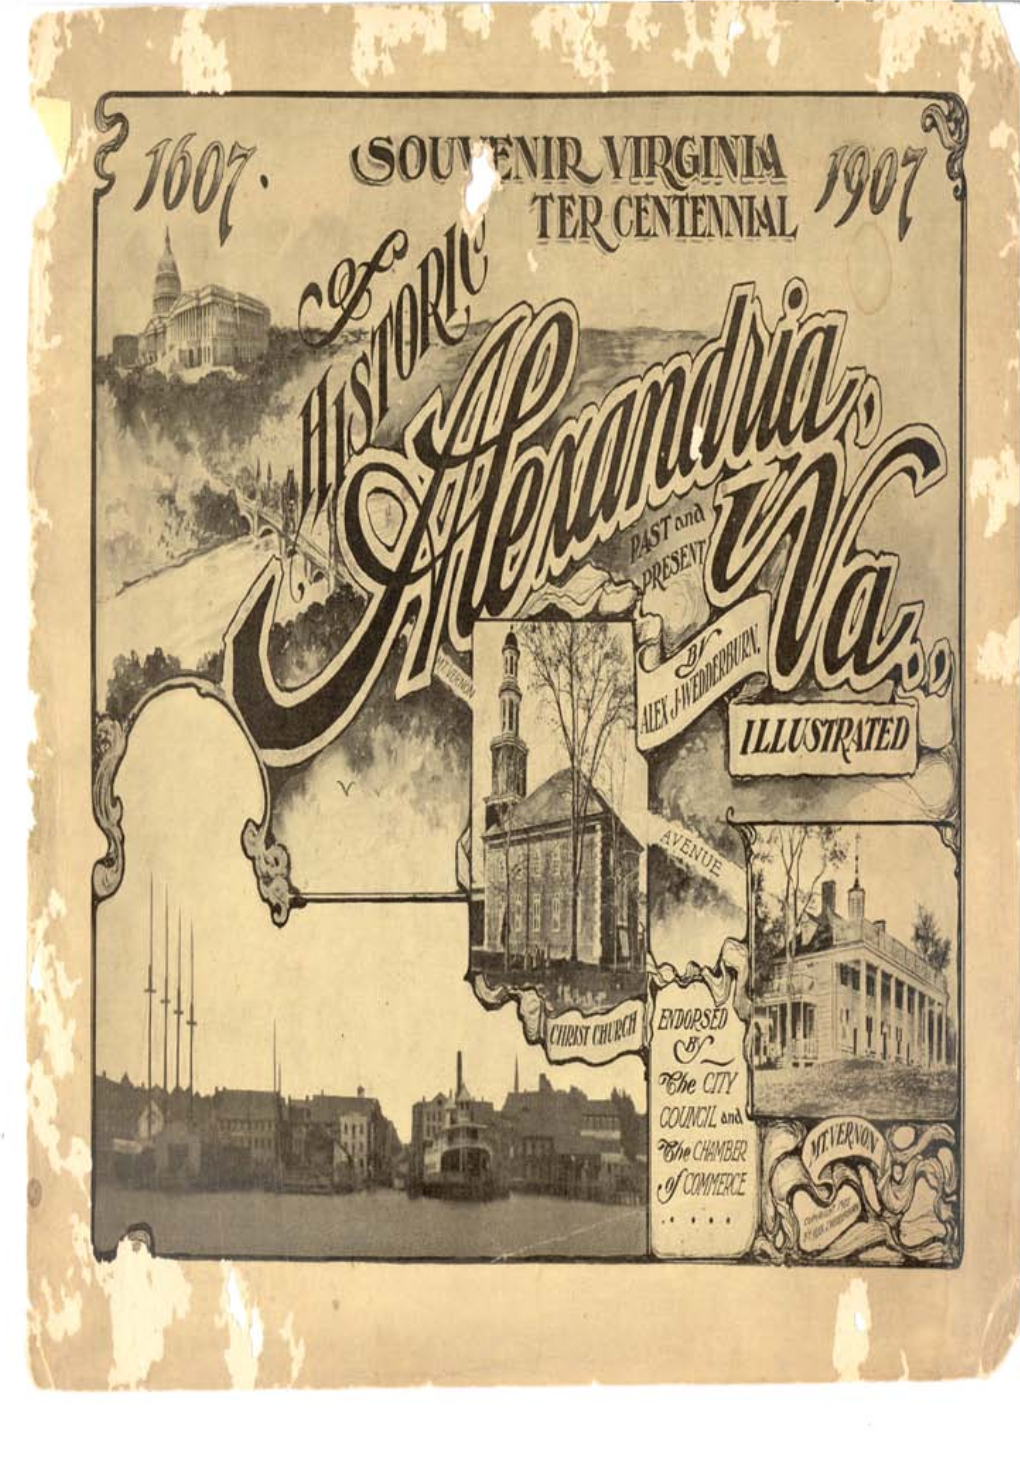 OHA Tercentennial Souvenir 1907